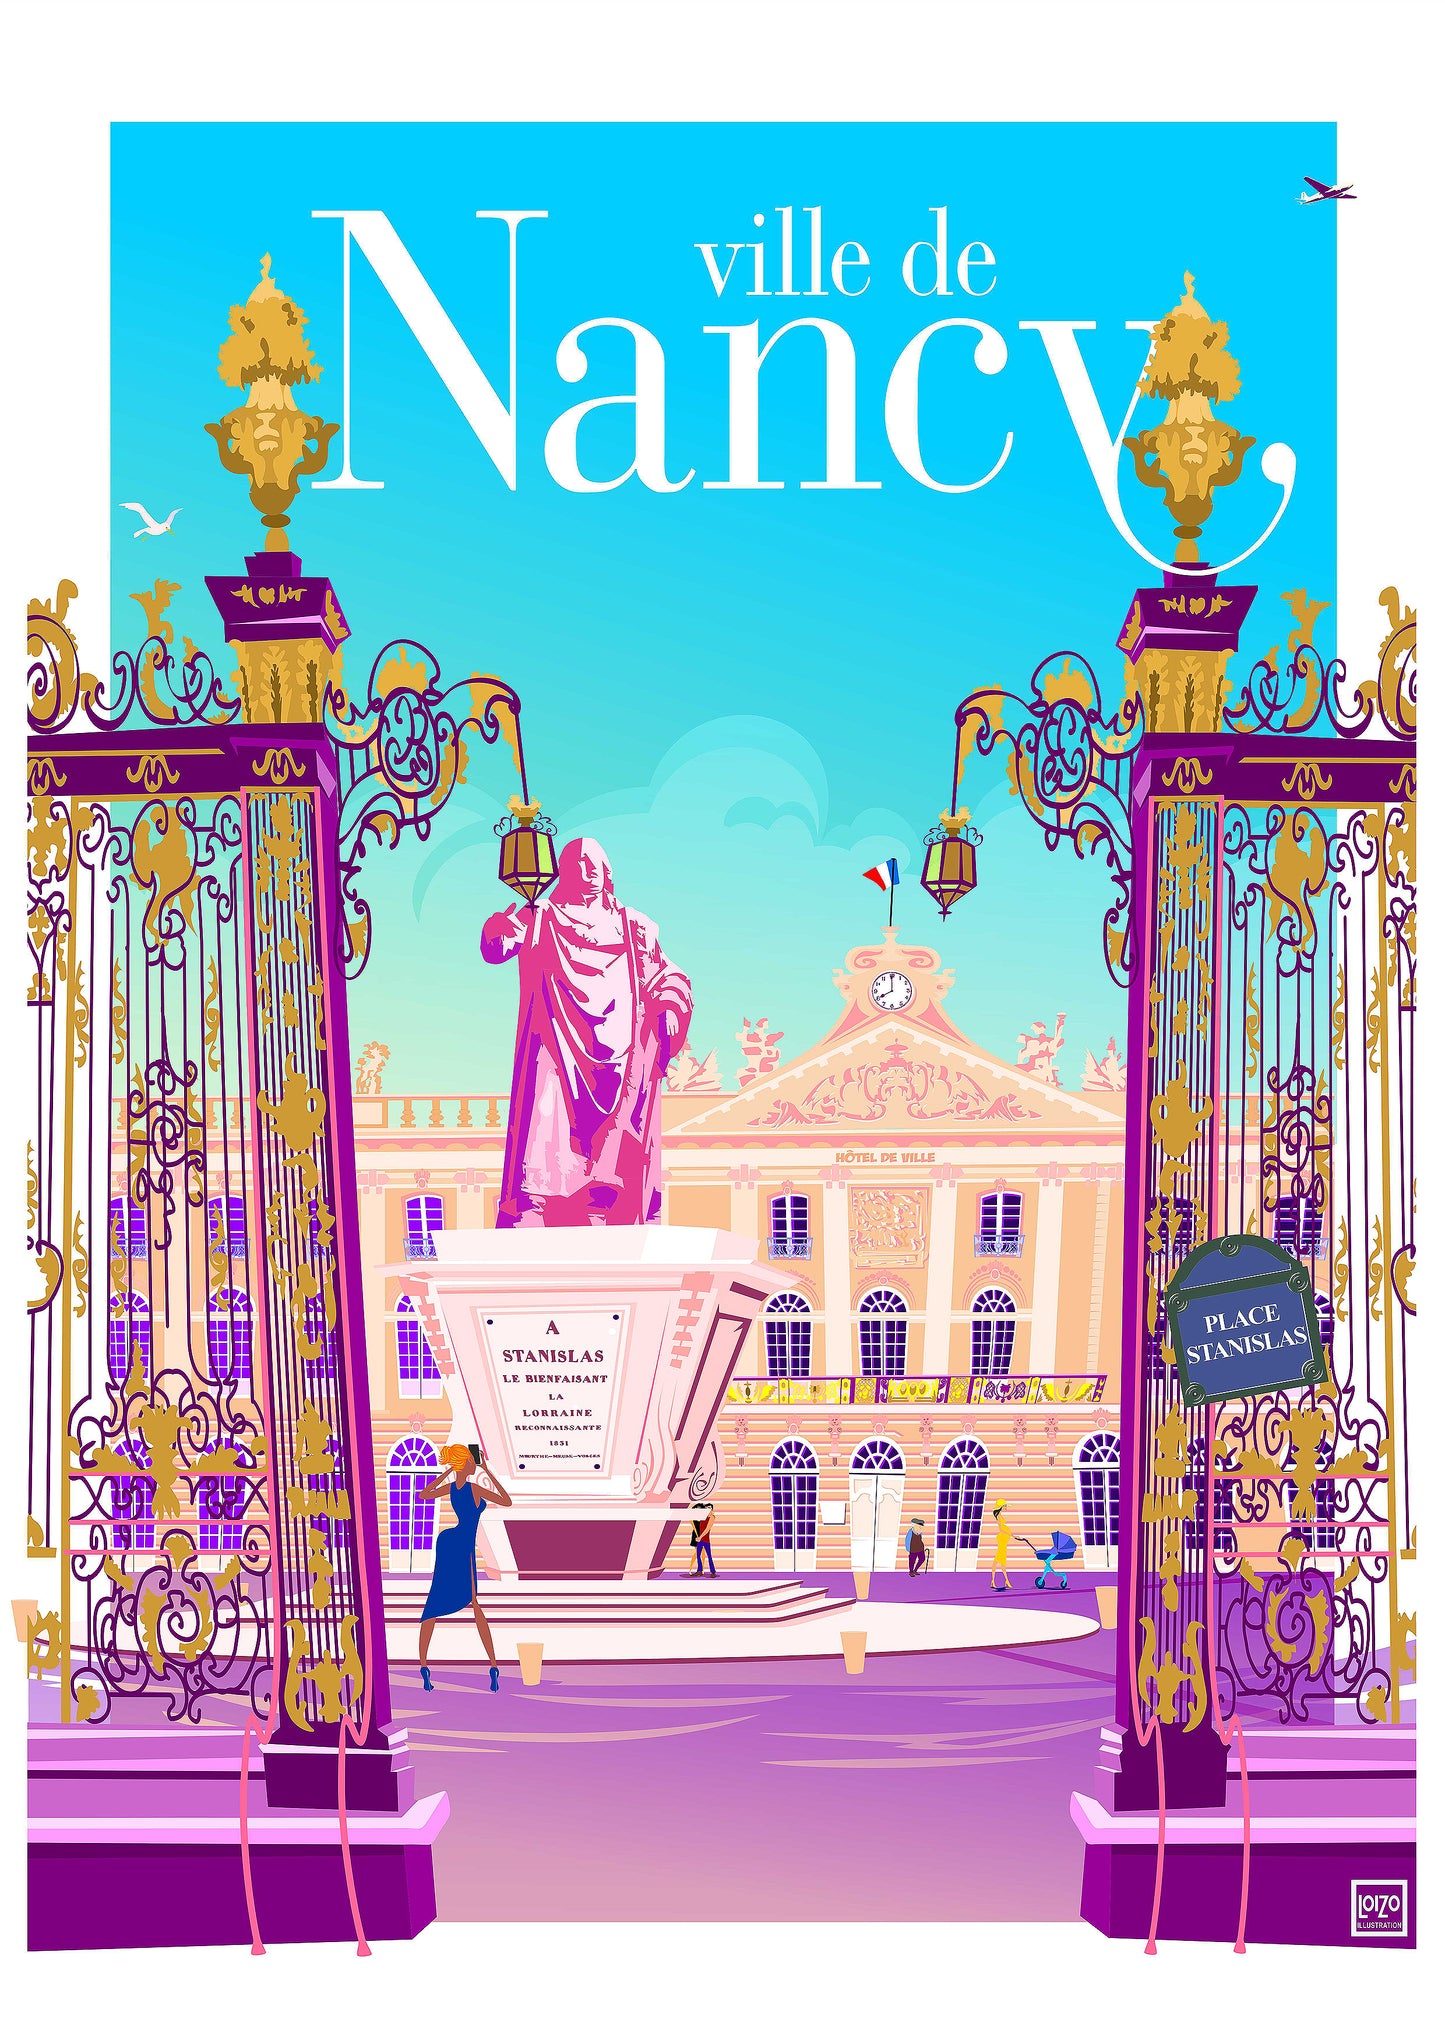 Nancy "Place Stanislas"